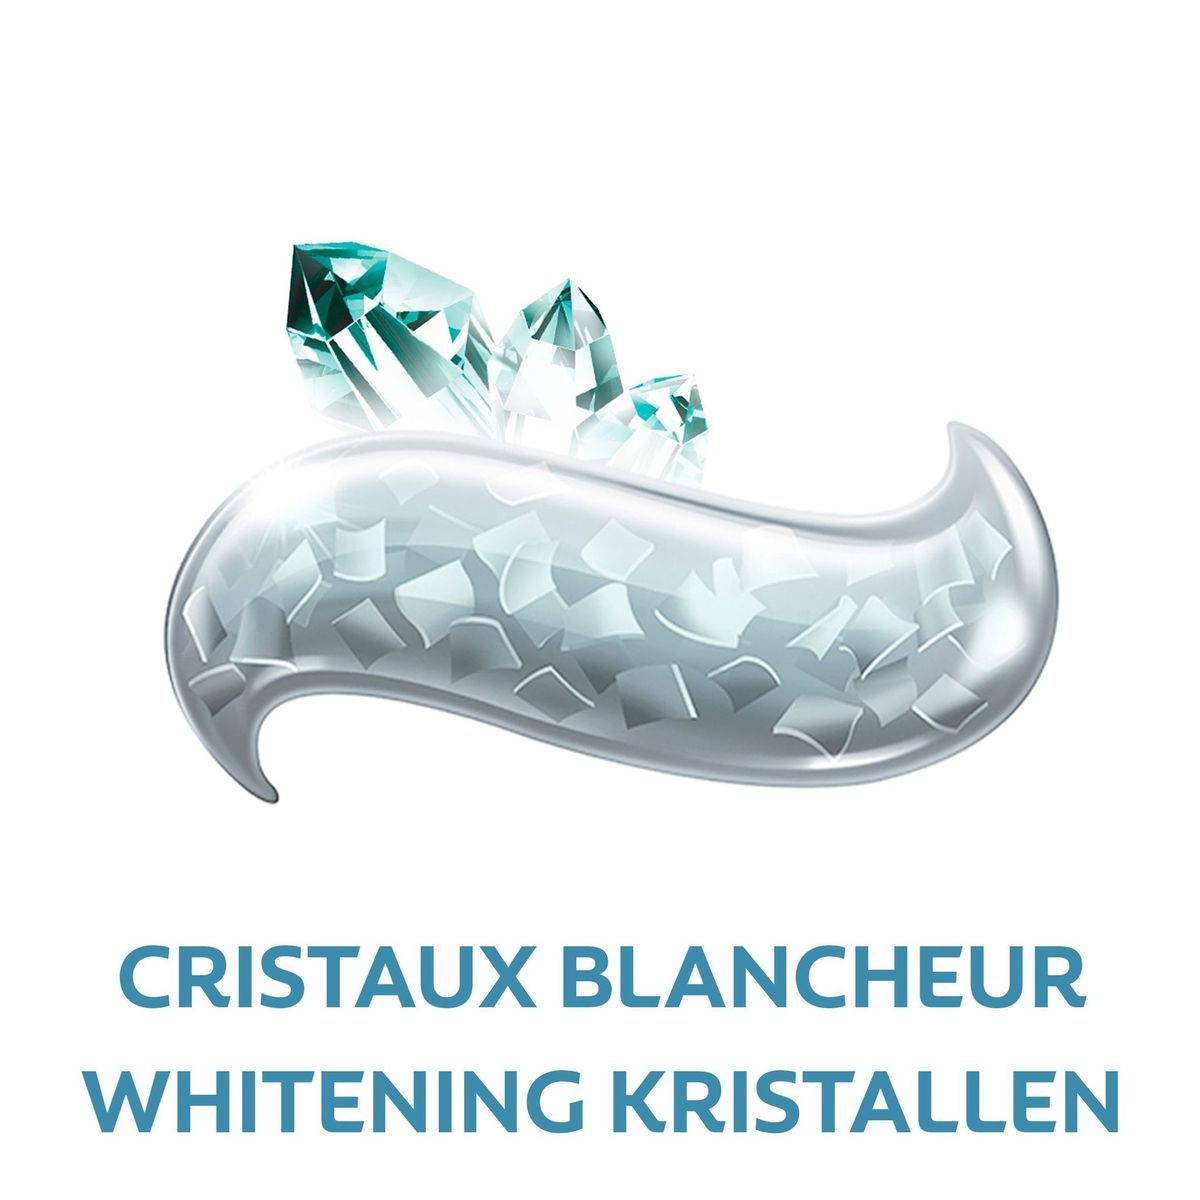 Colgate Max White cristaux blancheur menthe dentifrice 75ml